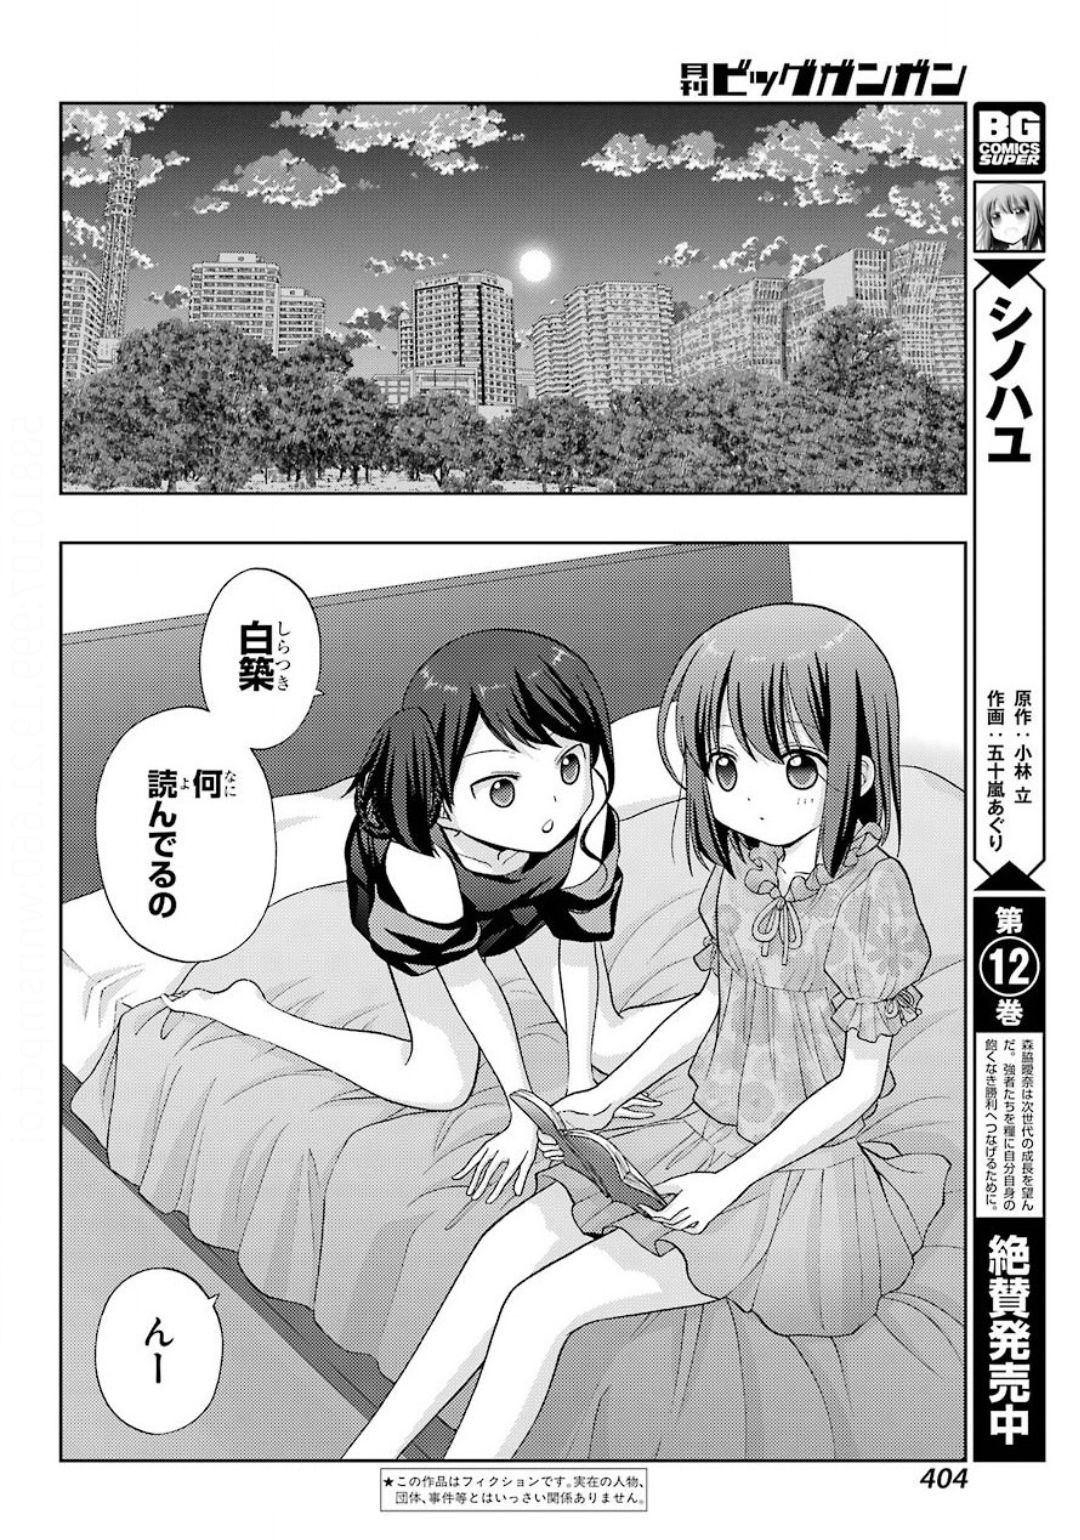 Shinohayu - The Dawn of Age Manga - Chapter 082 - Page 2